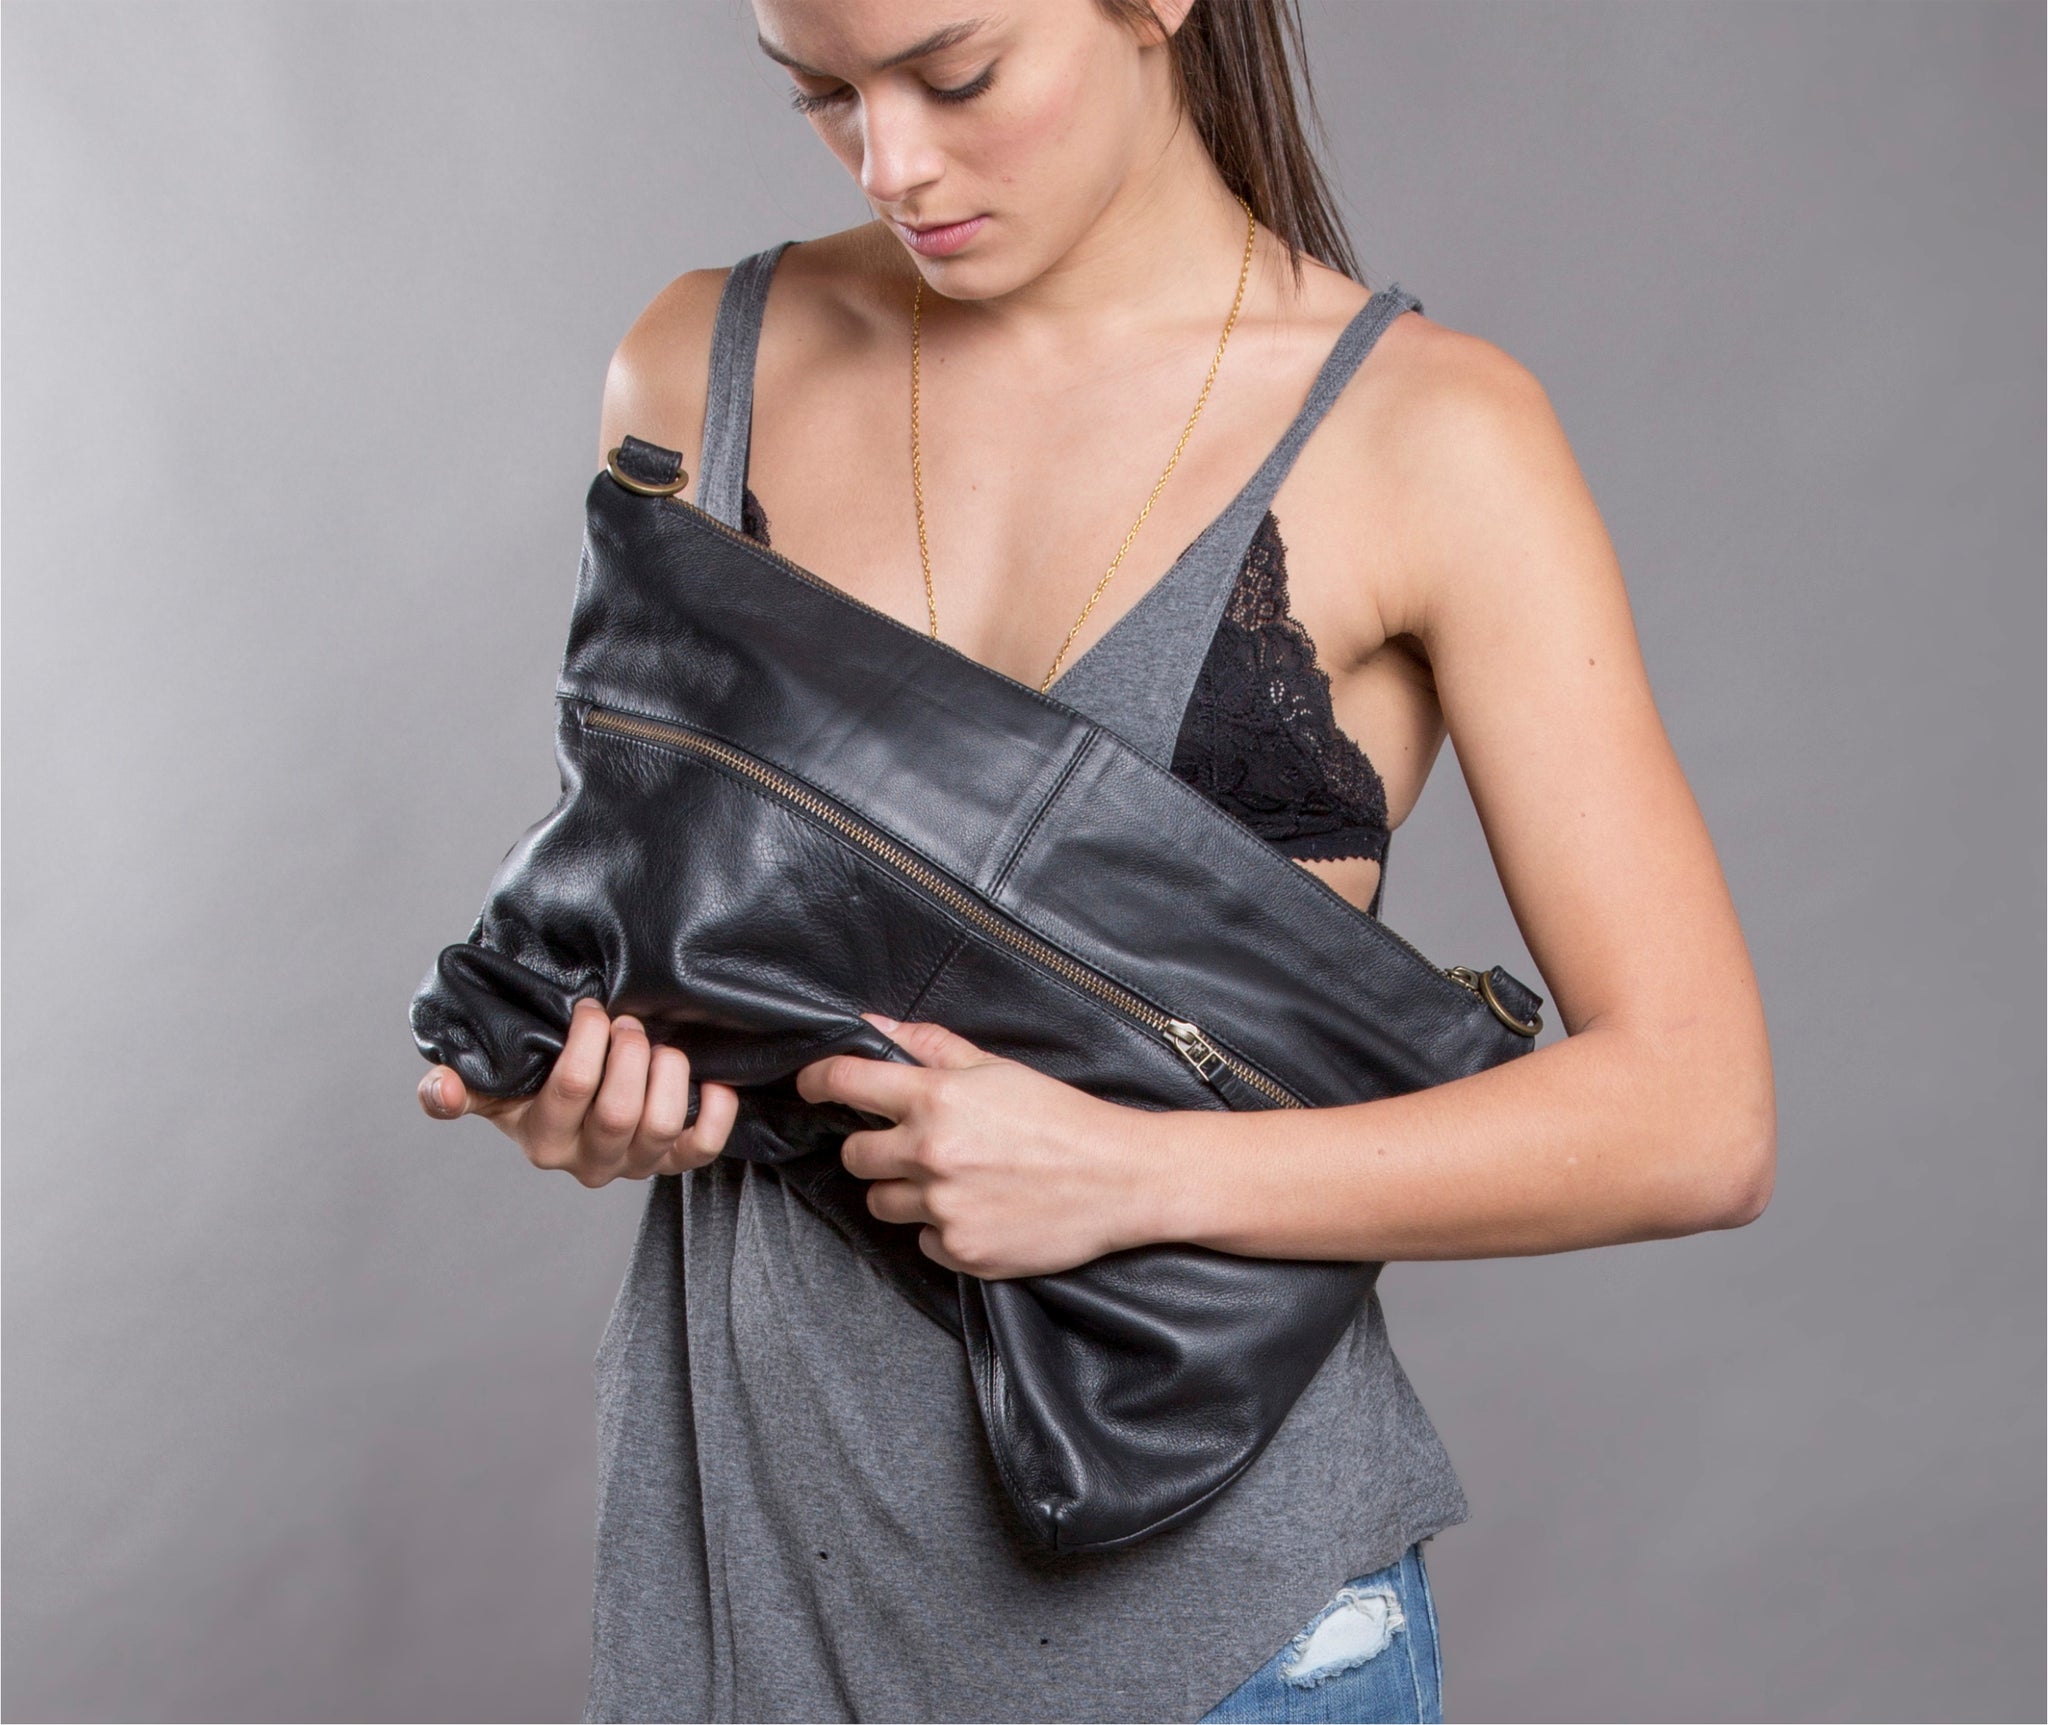 designer black crossbody bag